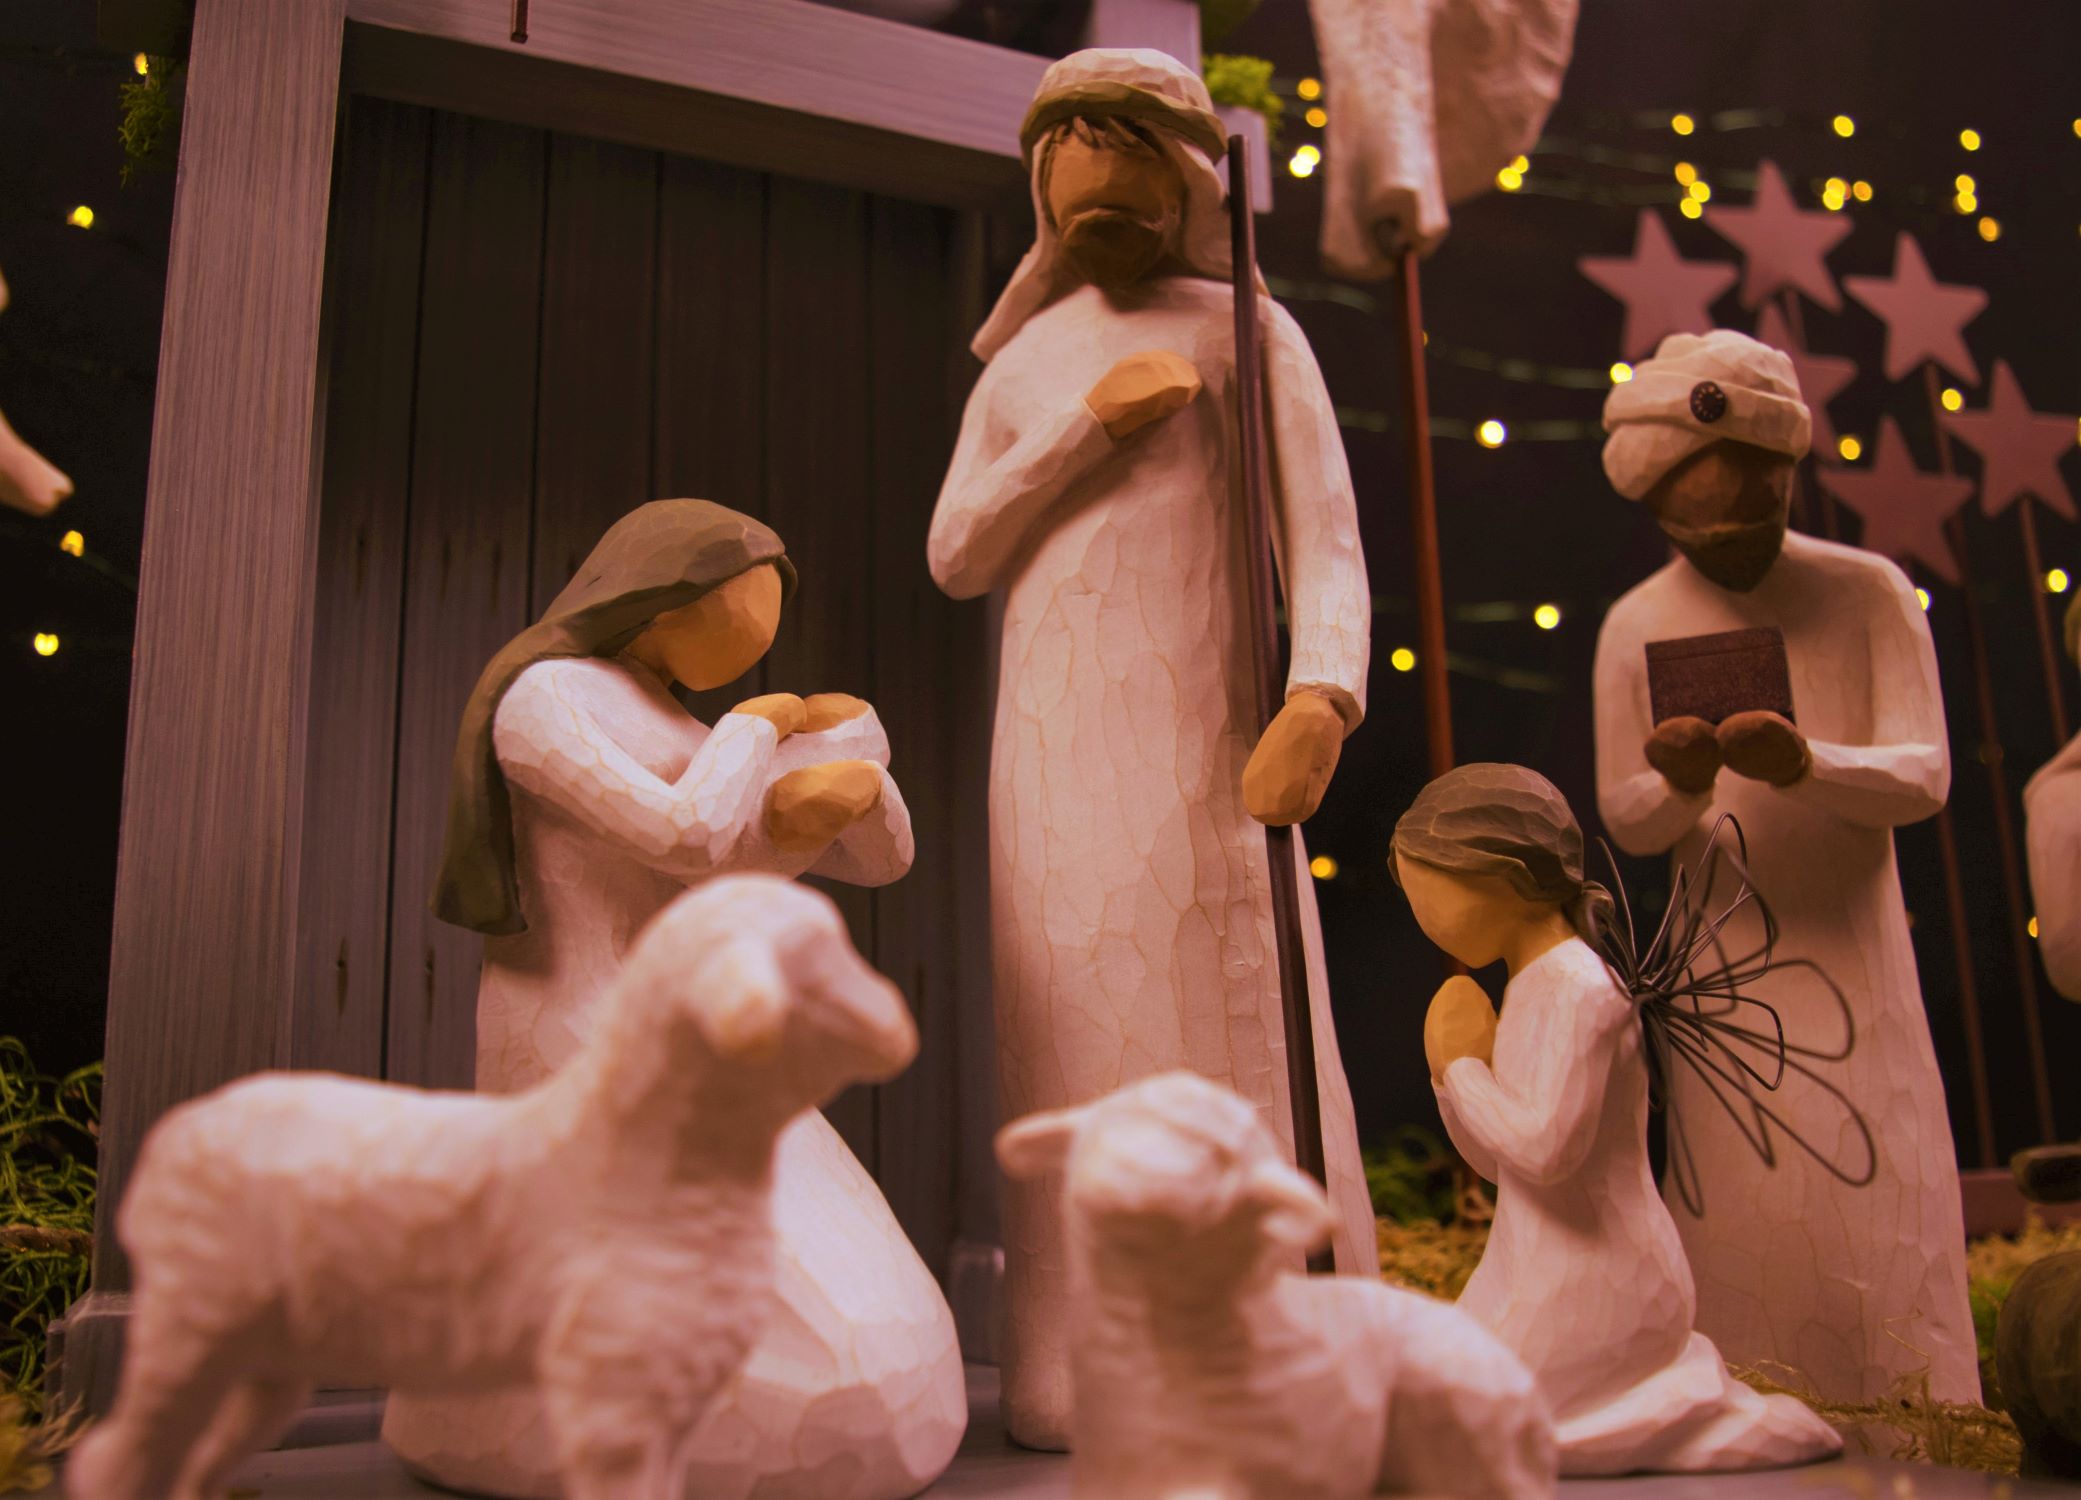 Scene from the Nativity